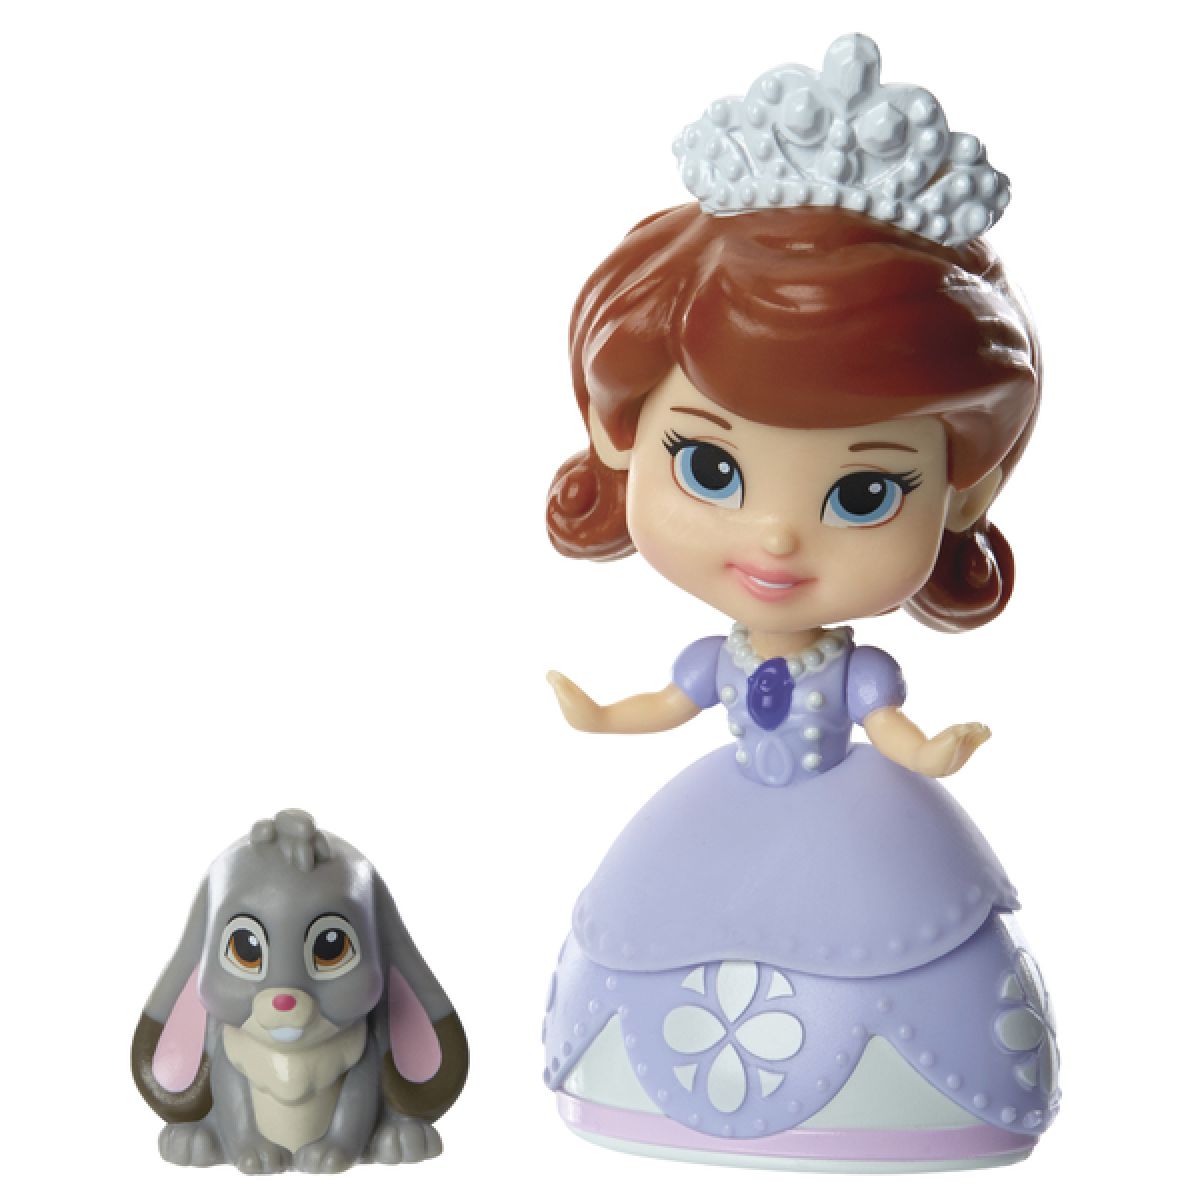 Jakks Pacific Disney Mini princezna a kamarád - Sofia and Clover